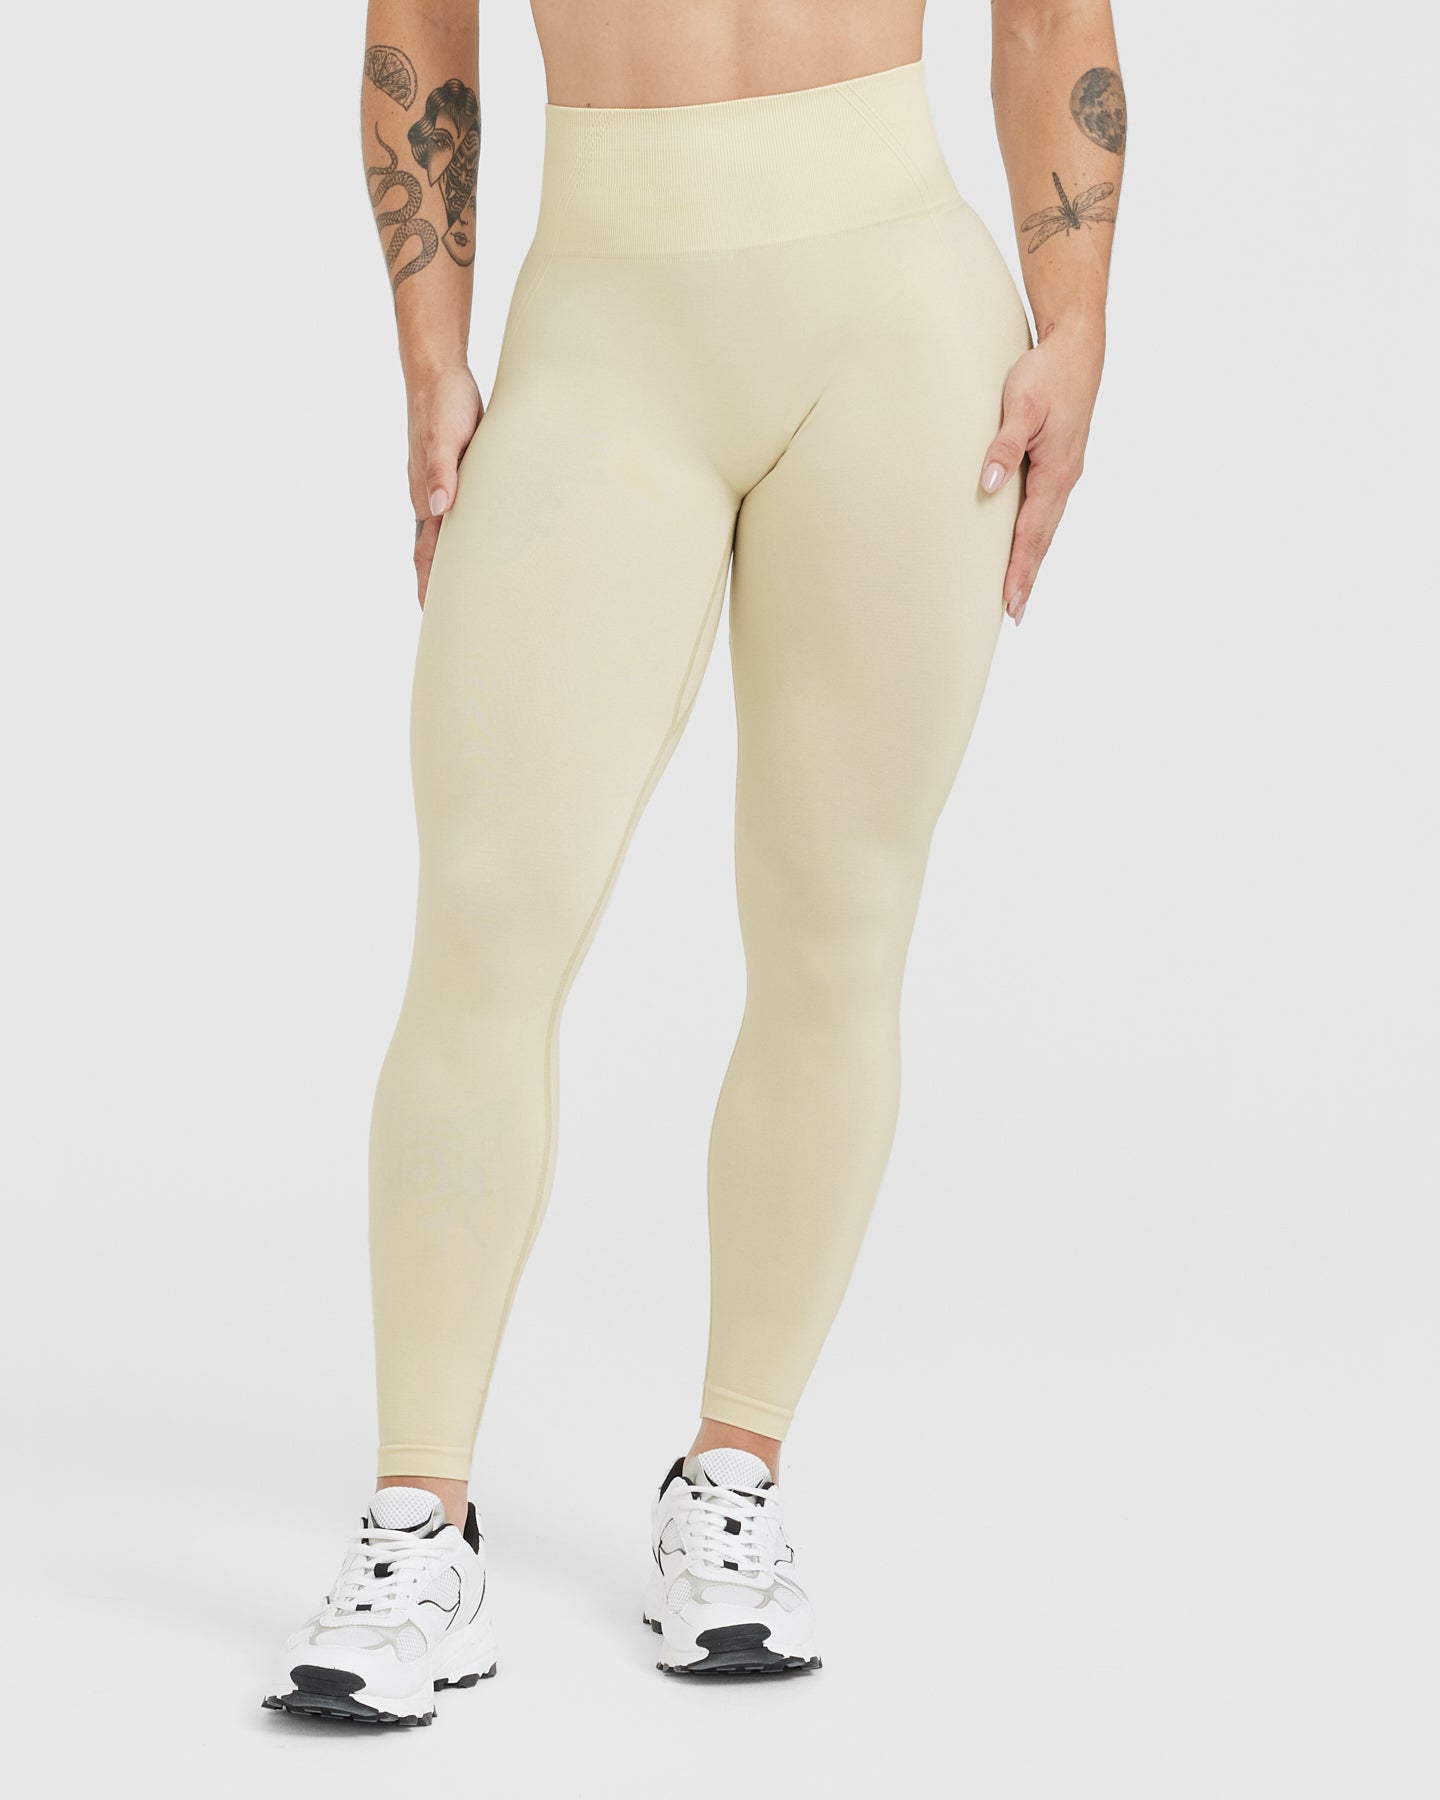 oner active effortless leggings - Athletic apparel